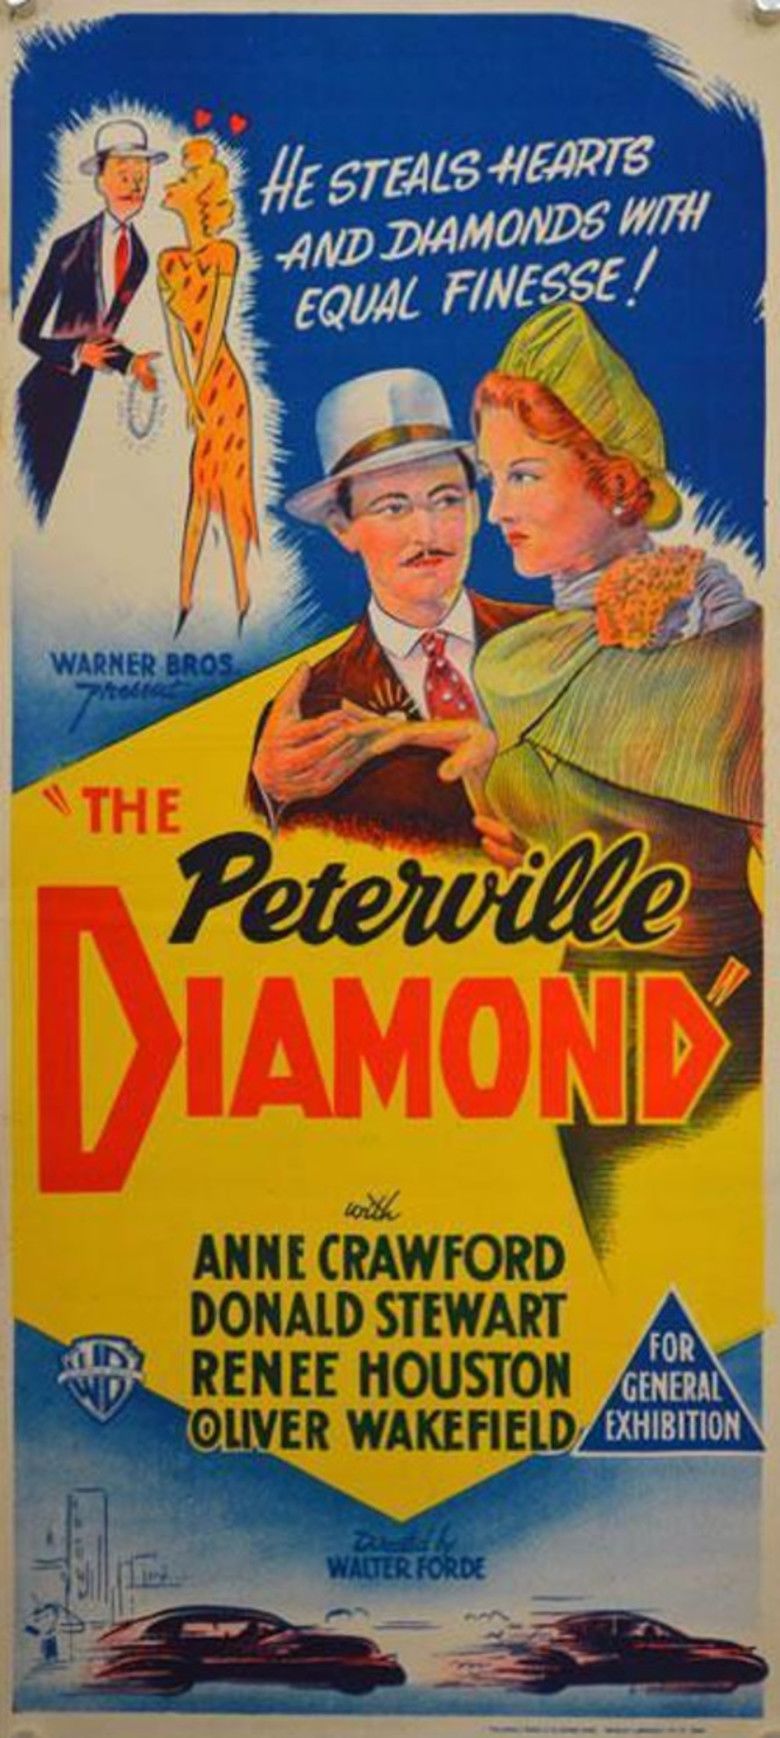 The Peterville Diamond movie poster